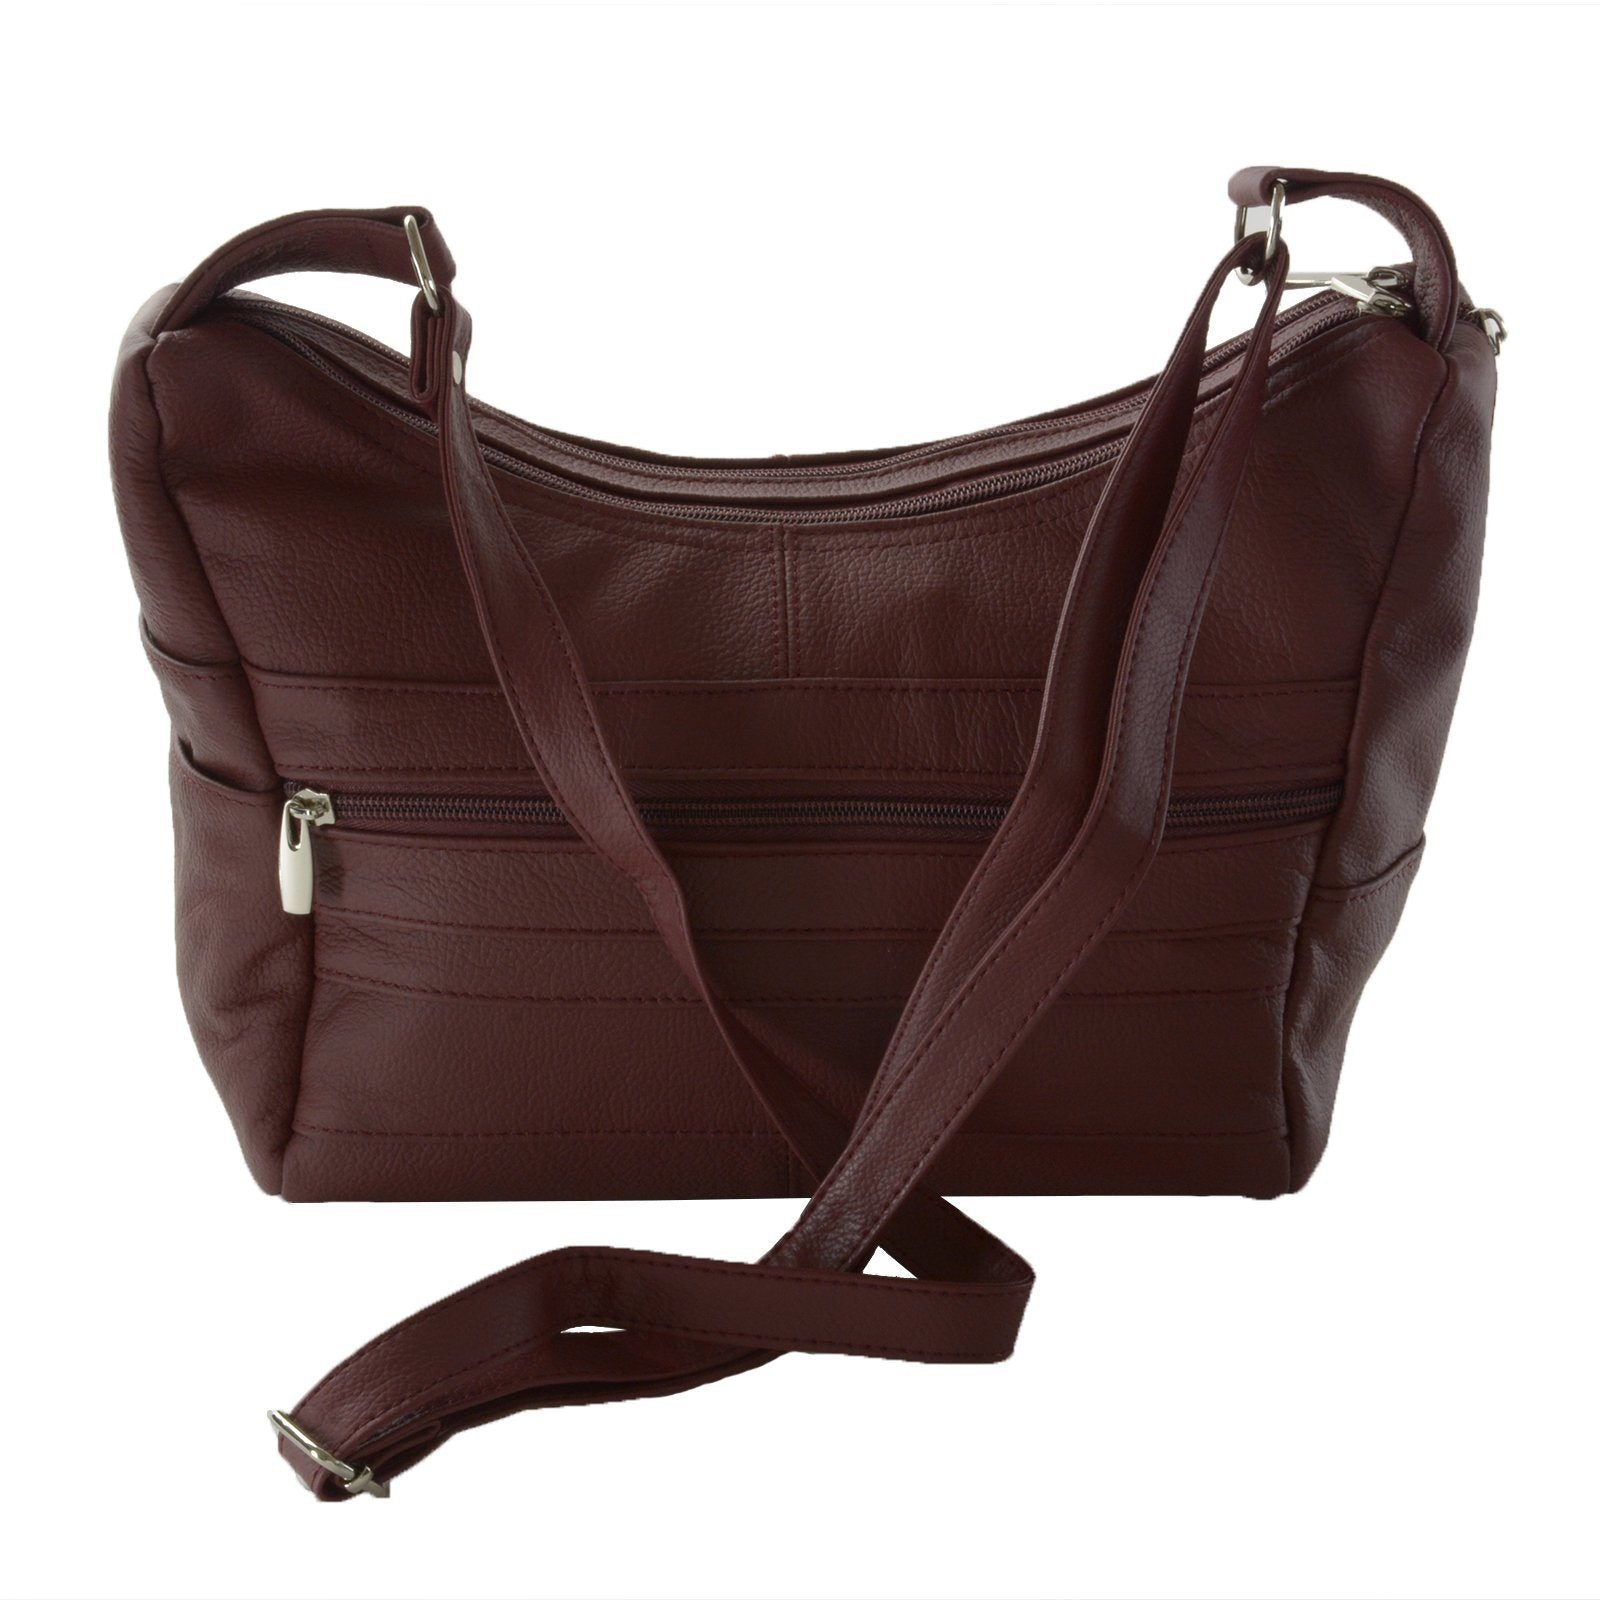 Buy TASCHEN shoulder bag/large 3 compartment handbag at Amazon.in